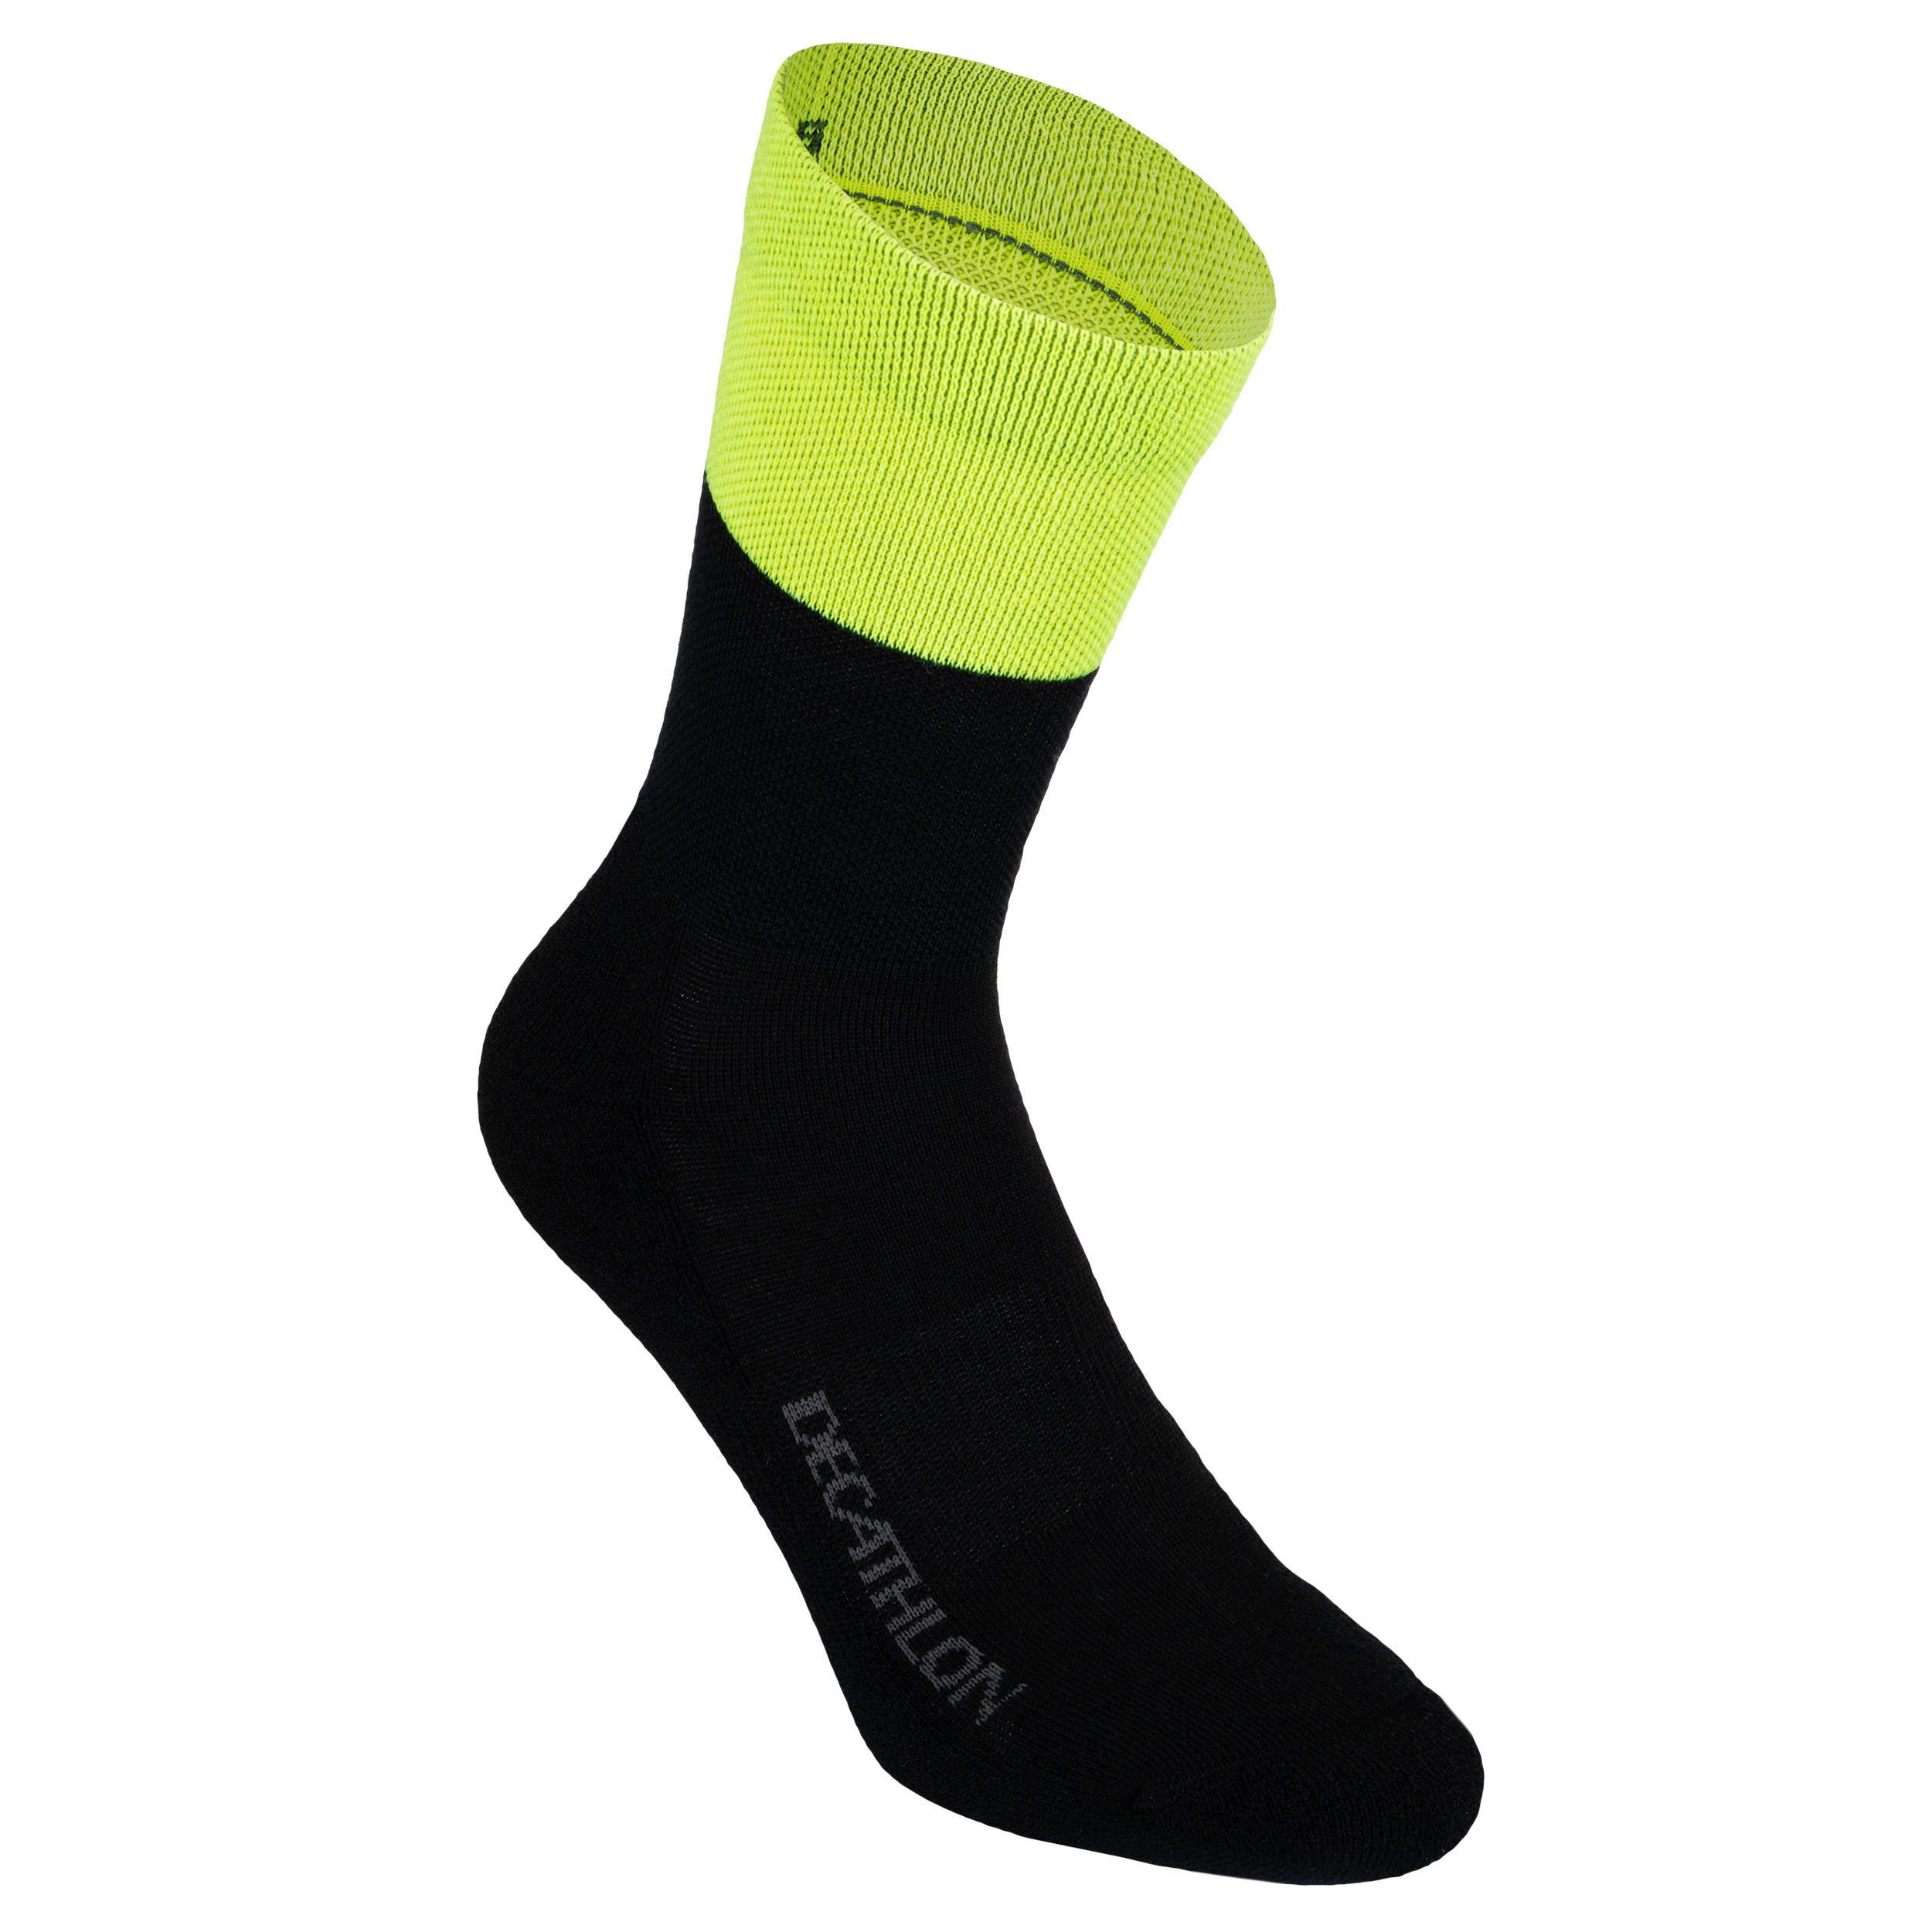 500 Winter Cycling Socks - Black/Neon Yellow 1/3